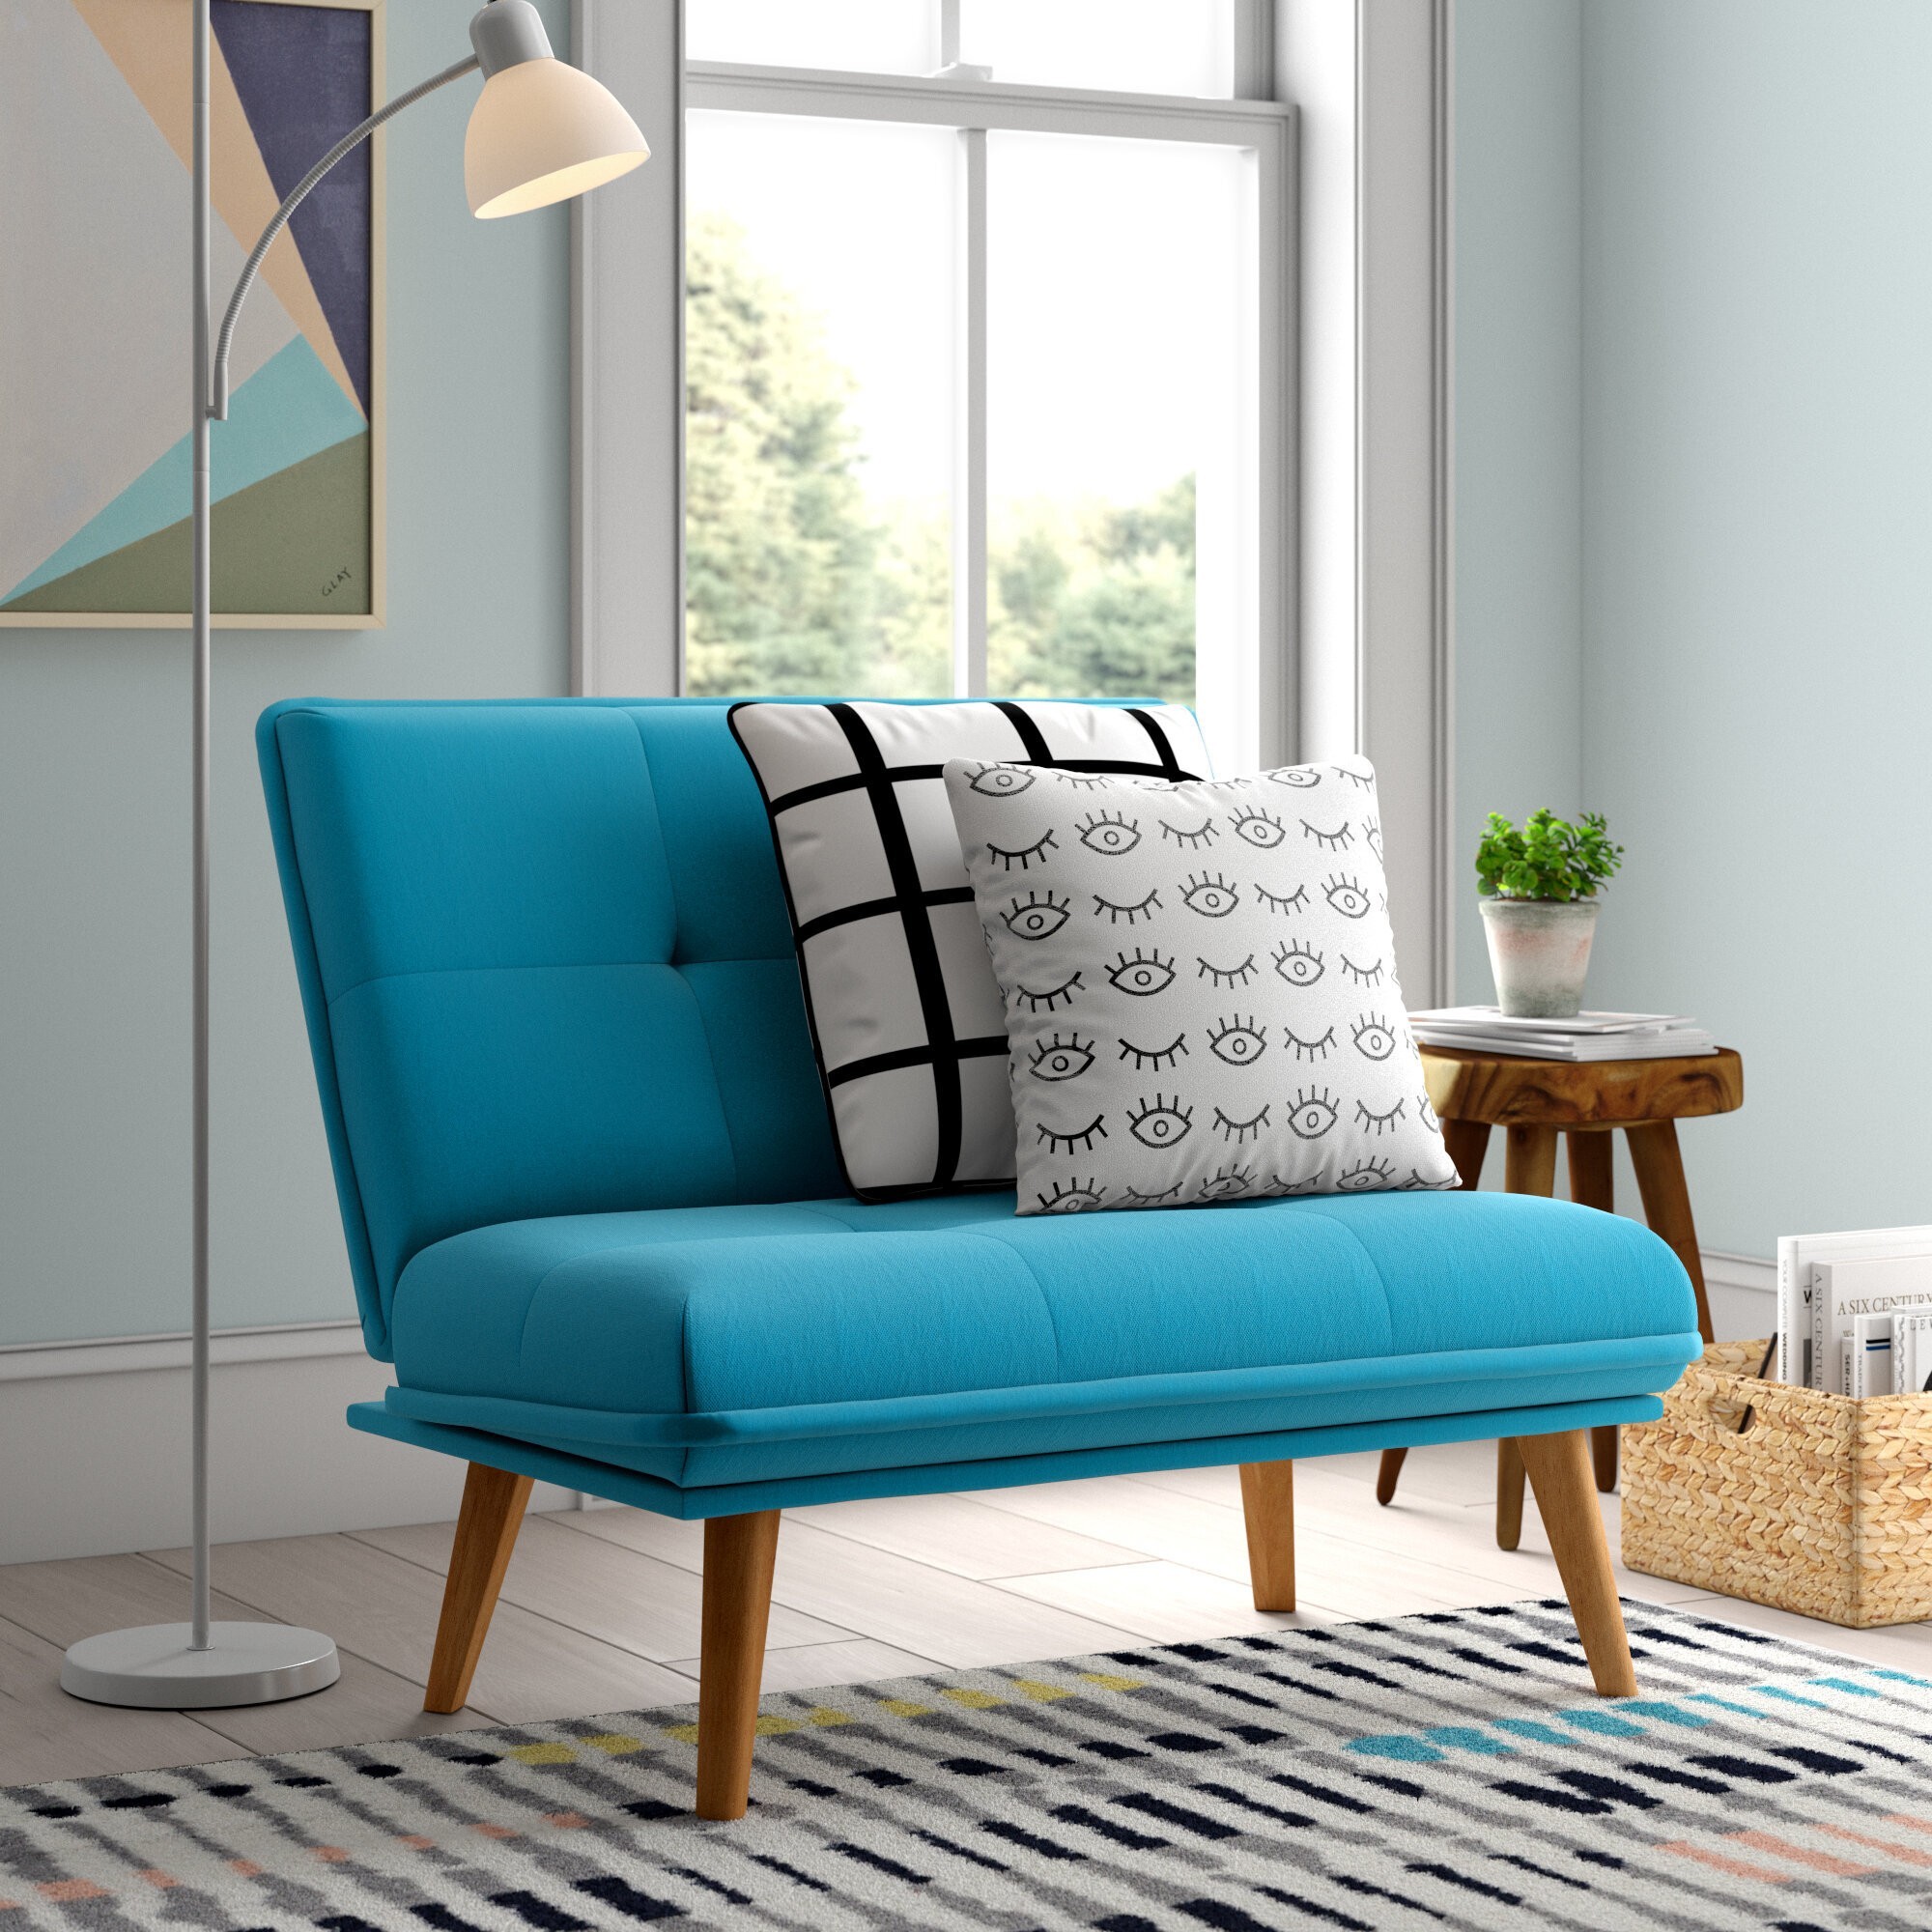 Modern Living Room Design with Sleeper Chair